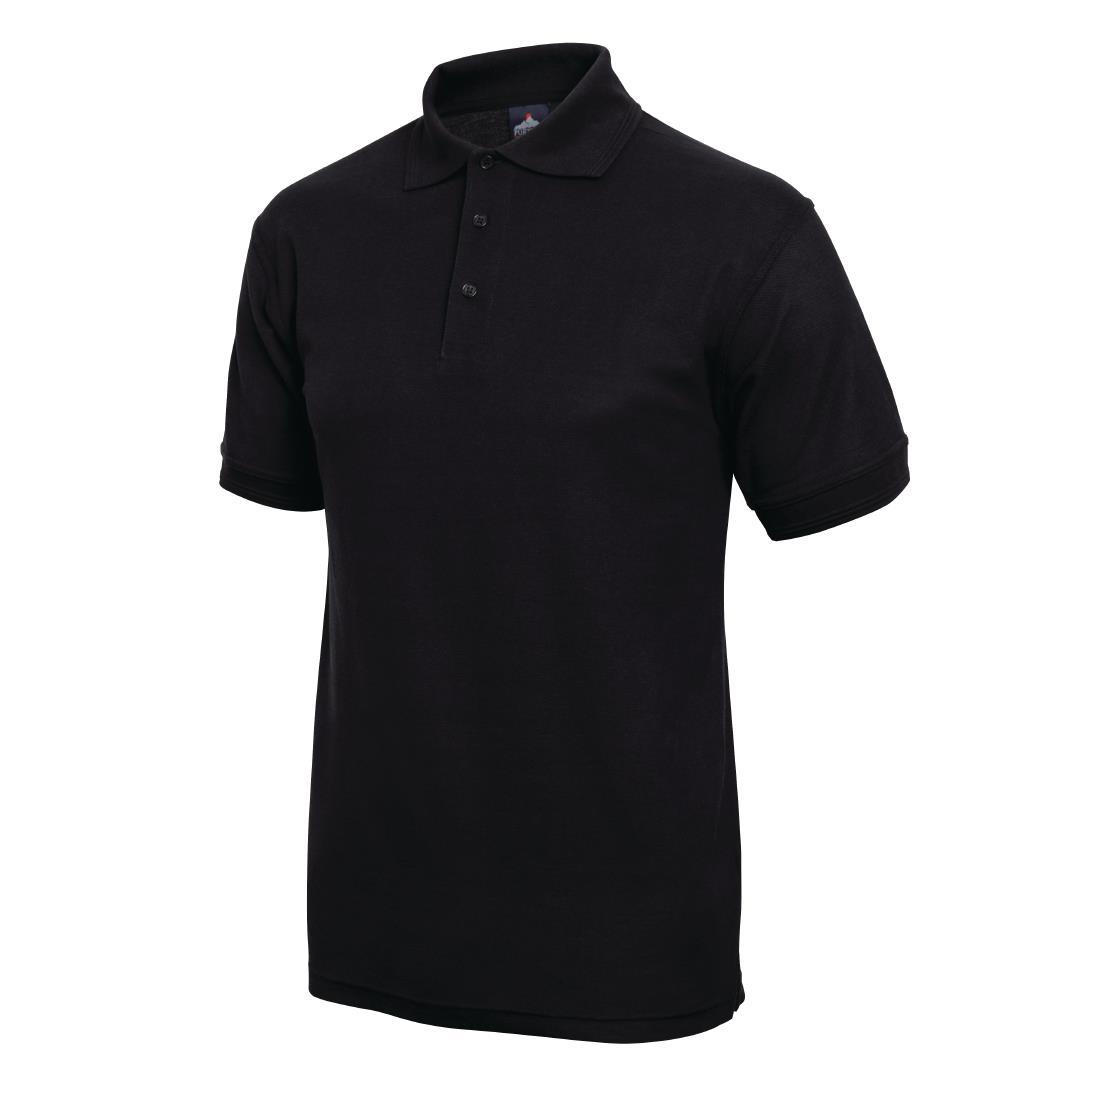 Unisex Polo Shirt Black L - A735-L  - 2